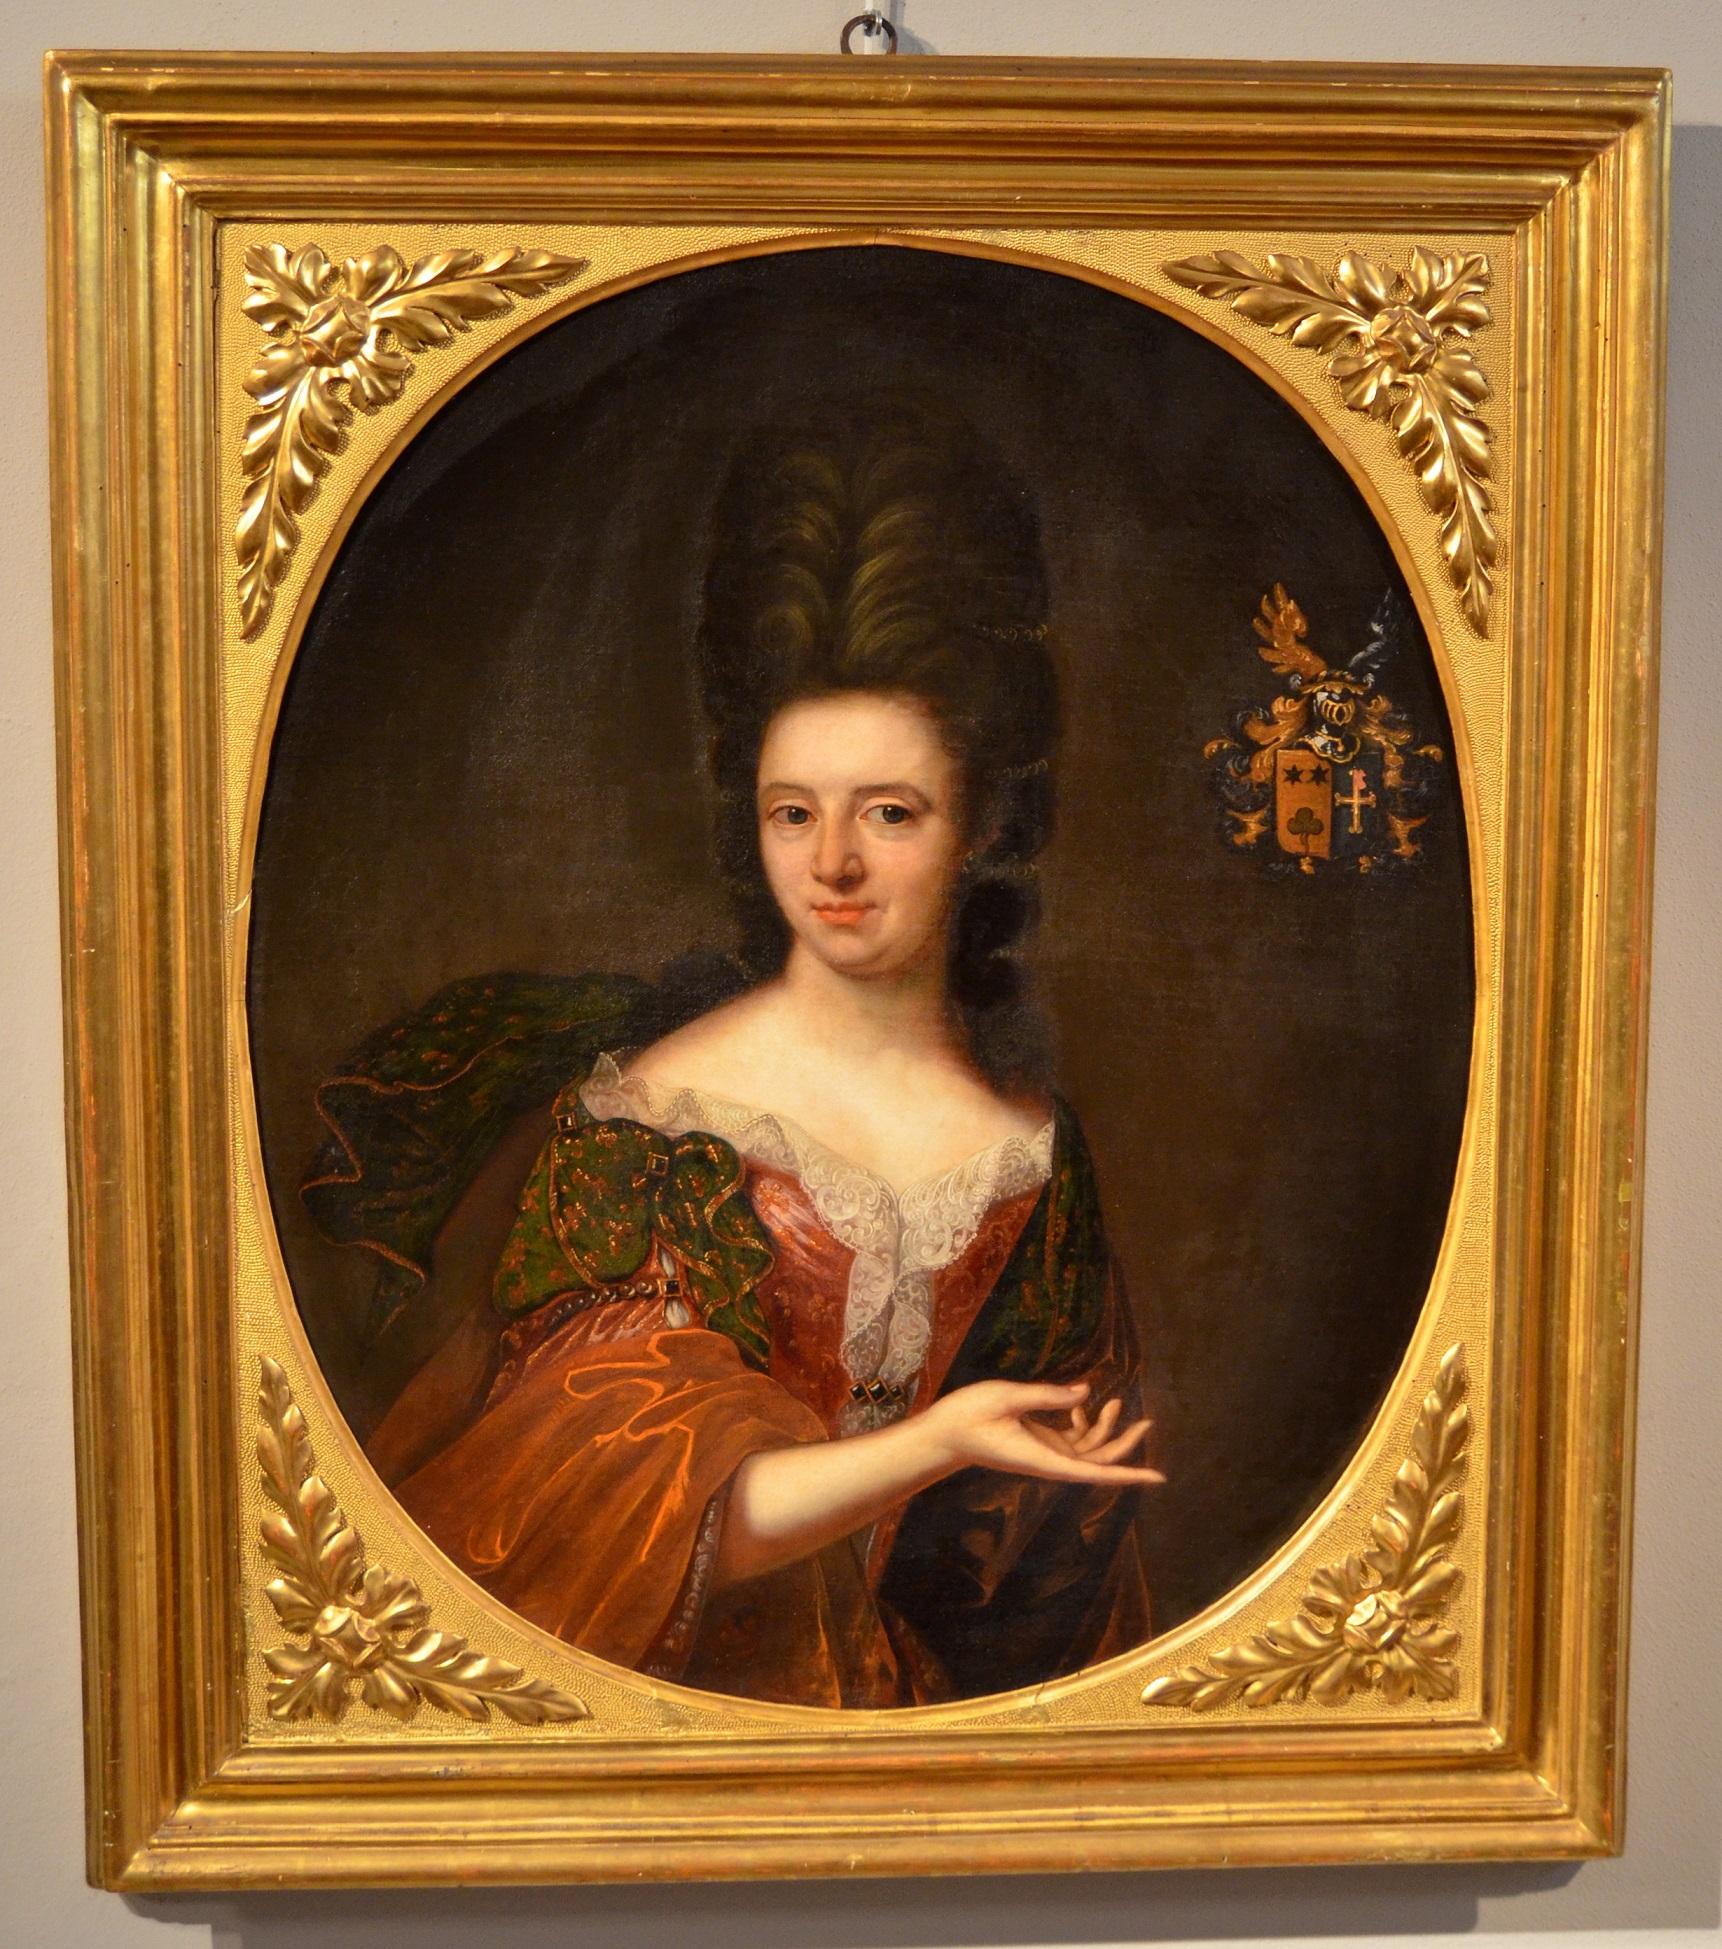 17th century portrait artists